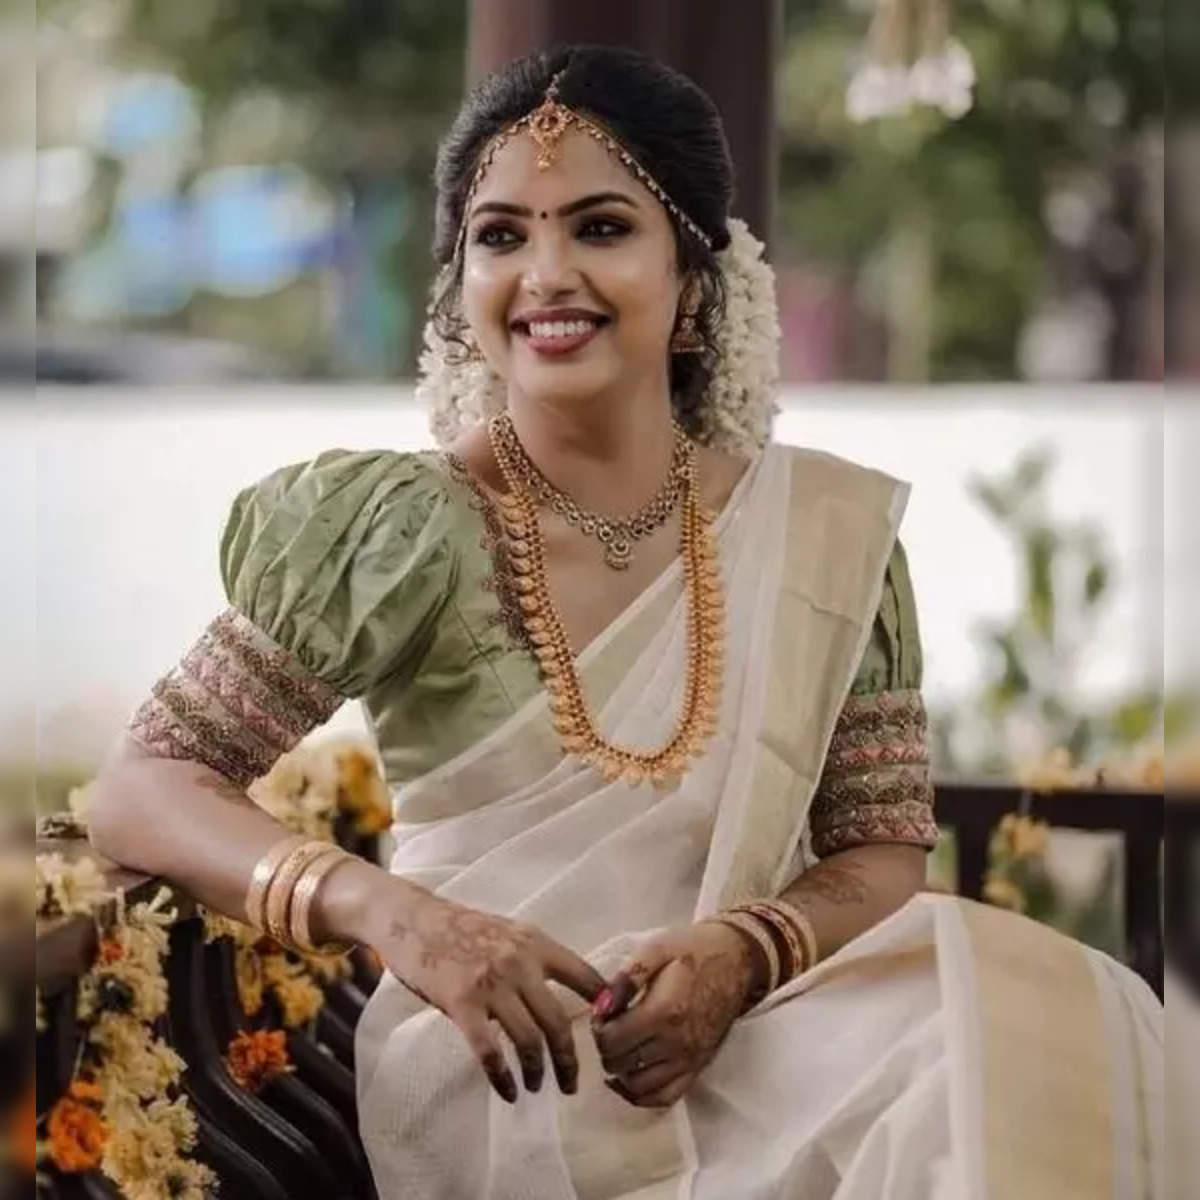 Kerala Saree: 10 Best Kerala Sarees You Must Purchase this Wedding Season -  The Economic Times